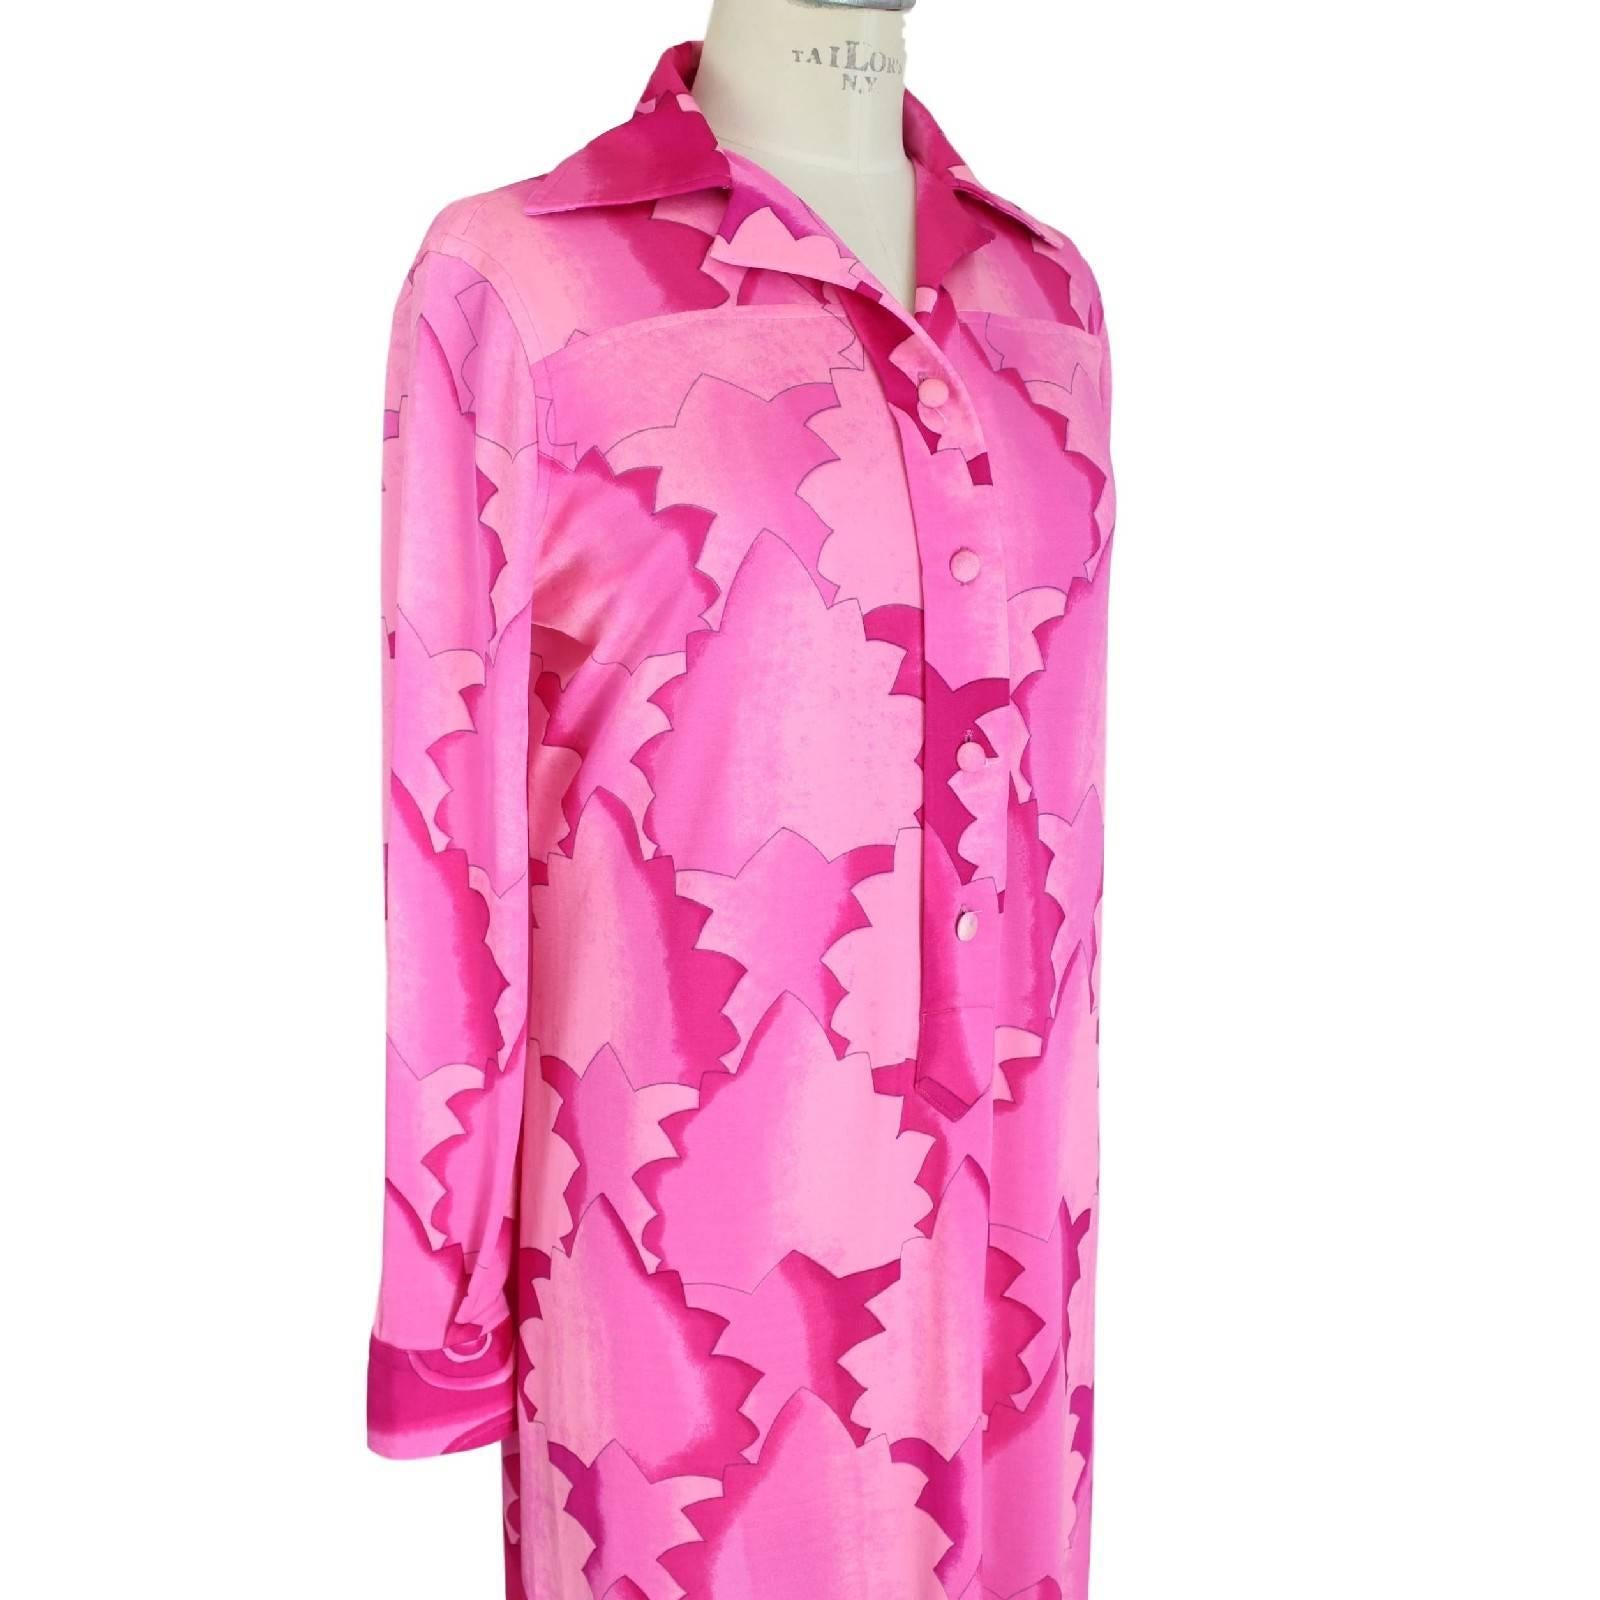 Pink La Mendola dress vintage tunic fuchsia 1970s long 100% banlon size 48 geometric For Sale